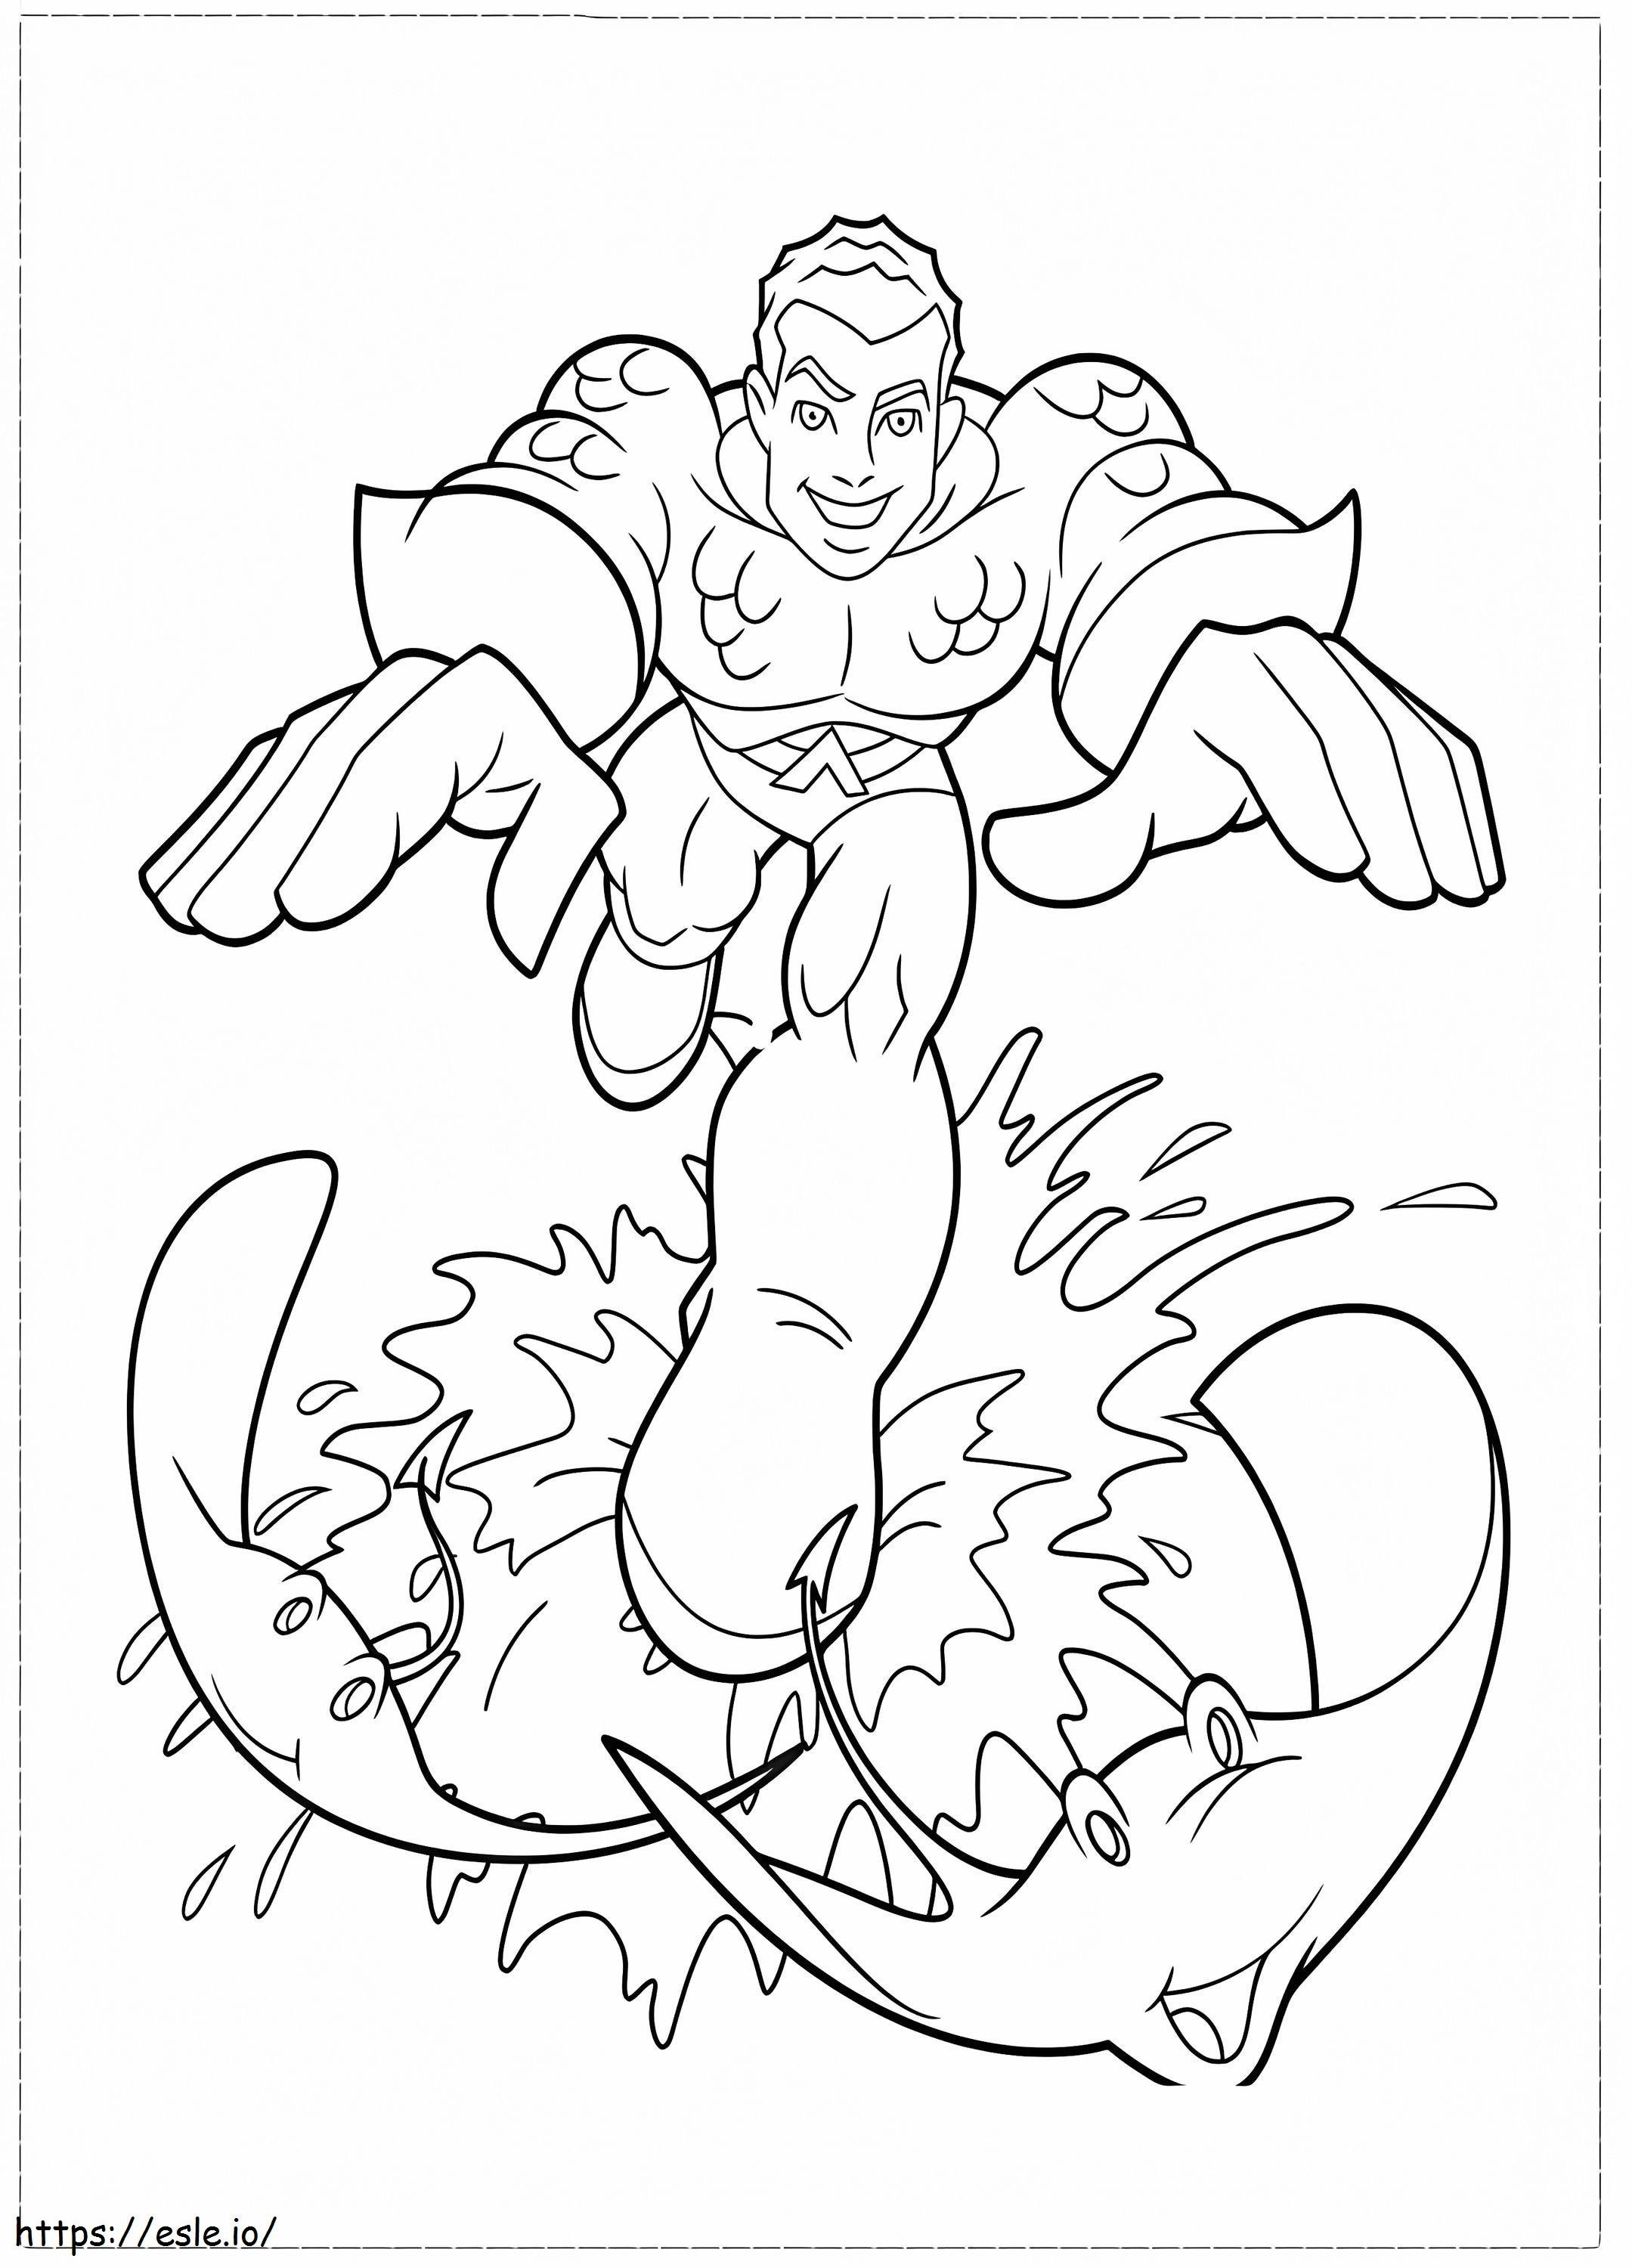 Aquaman Chases Two Rayas coloring page